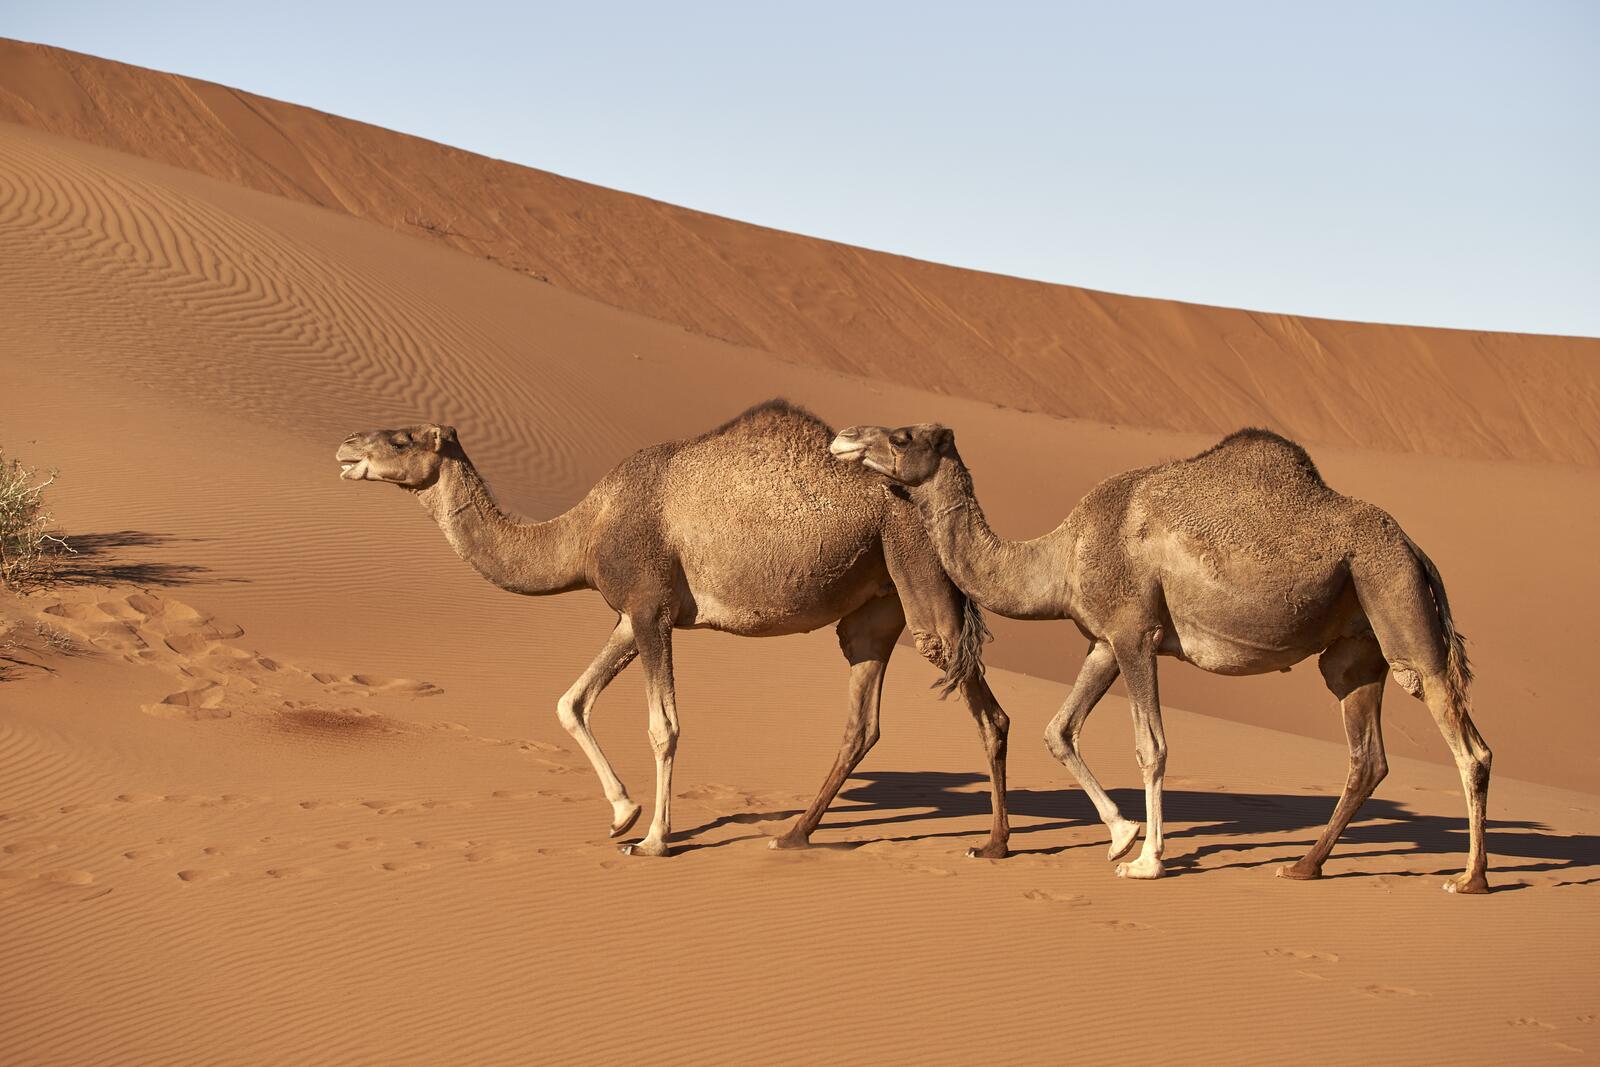 Wallpapers animal camels desert on the desktop